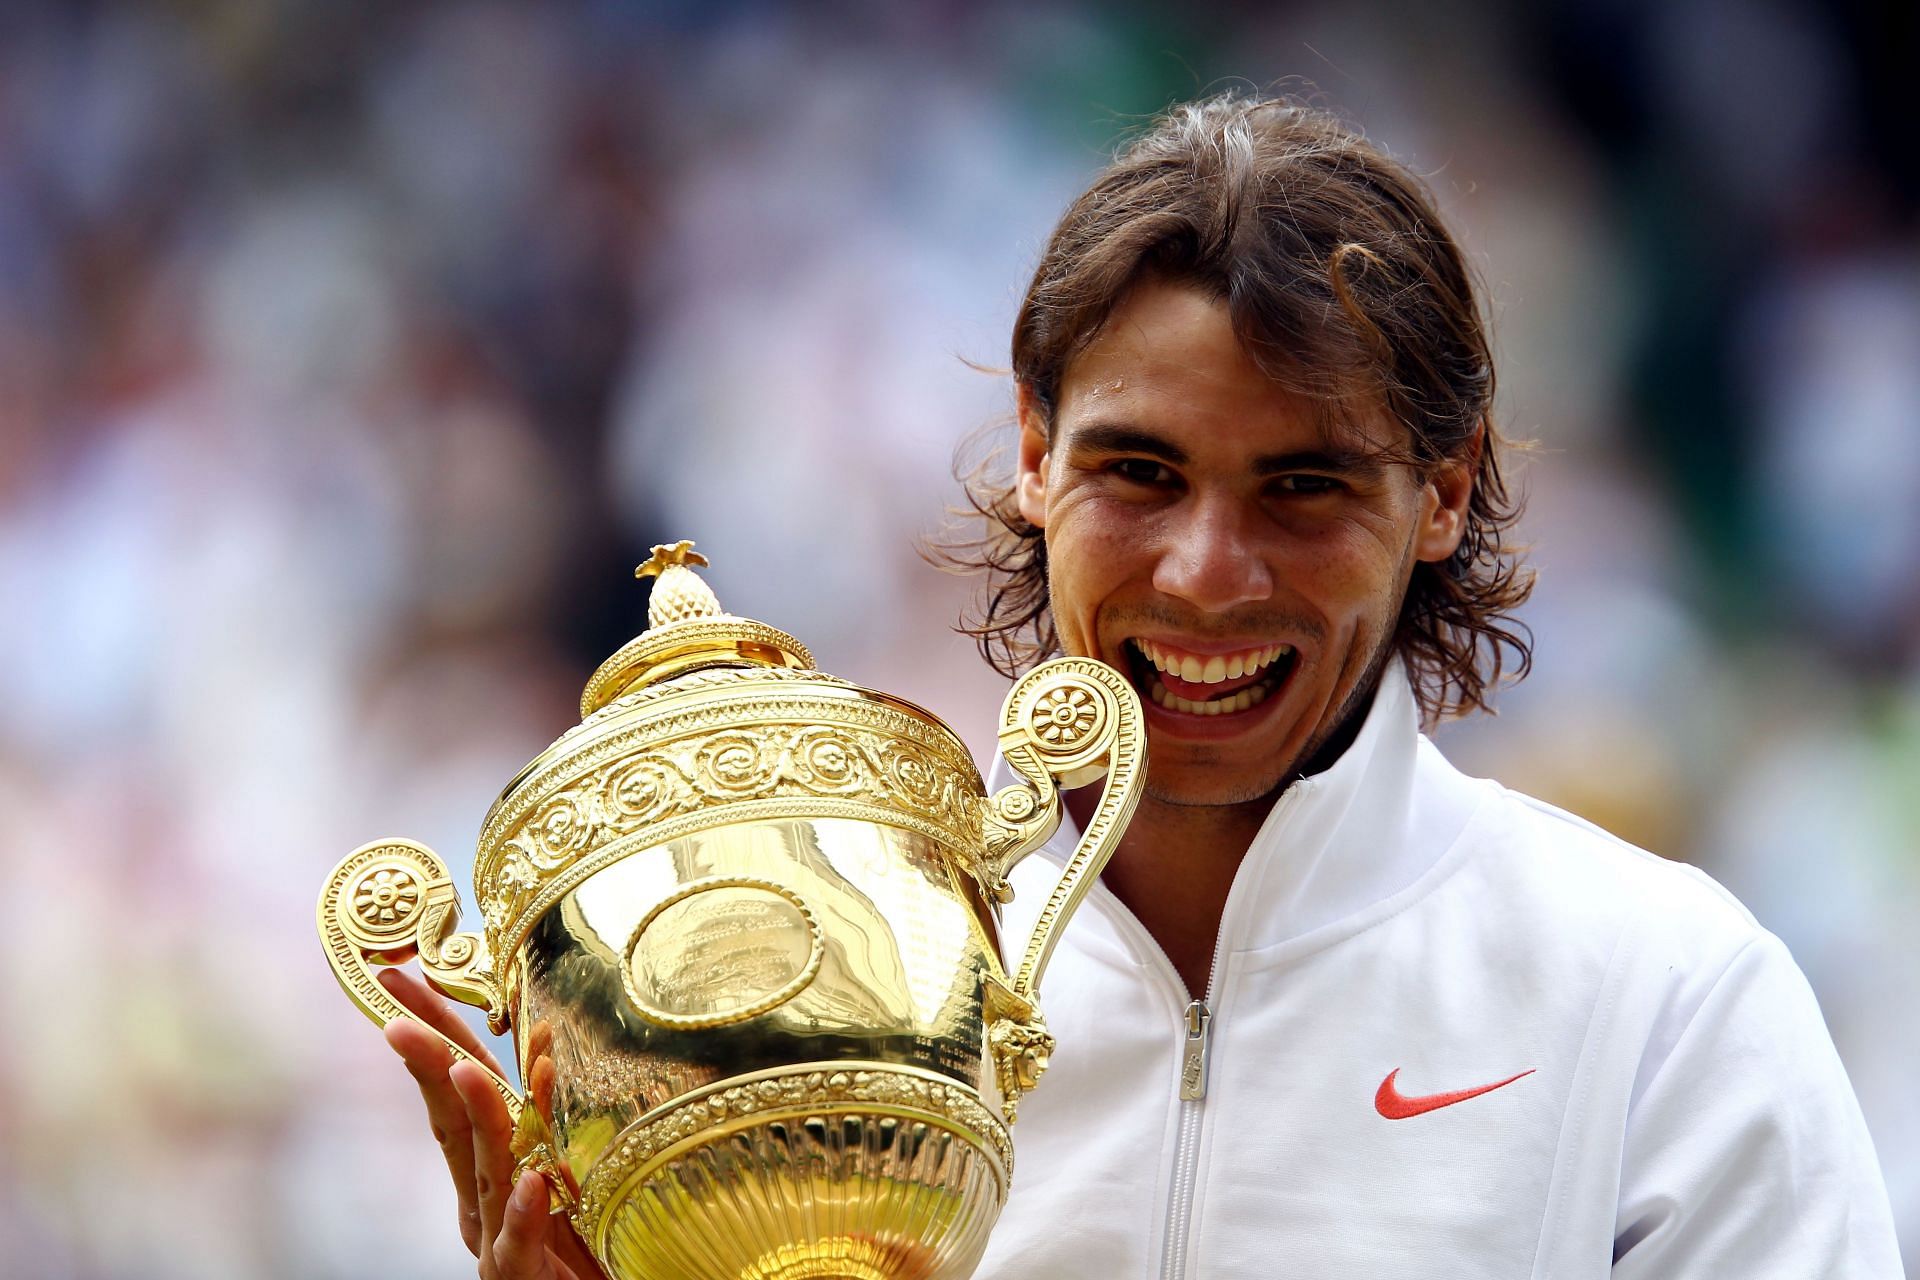 Rafael Nadal has won Wimbledon twice so far